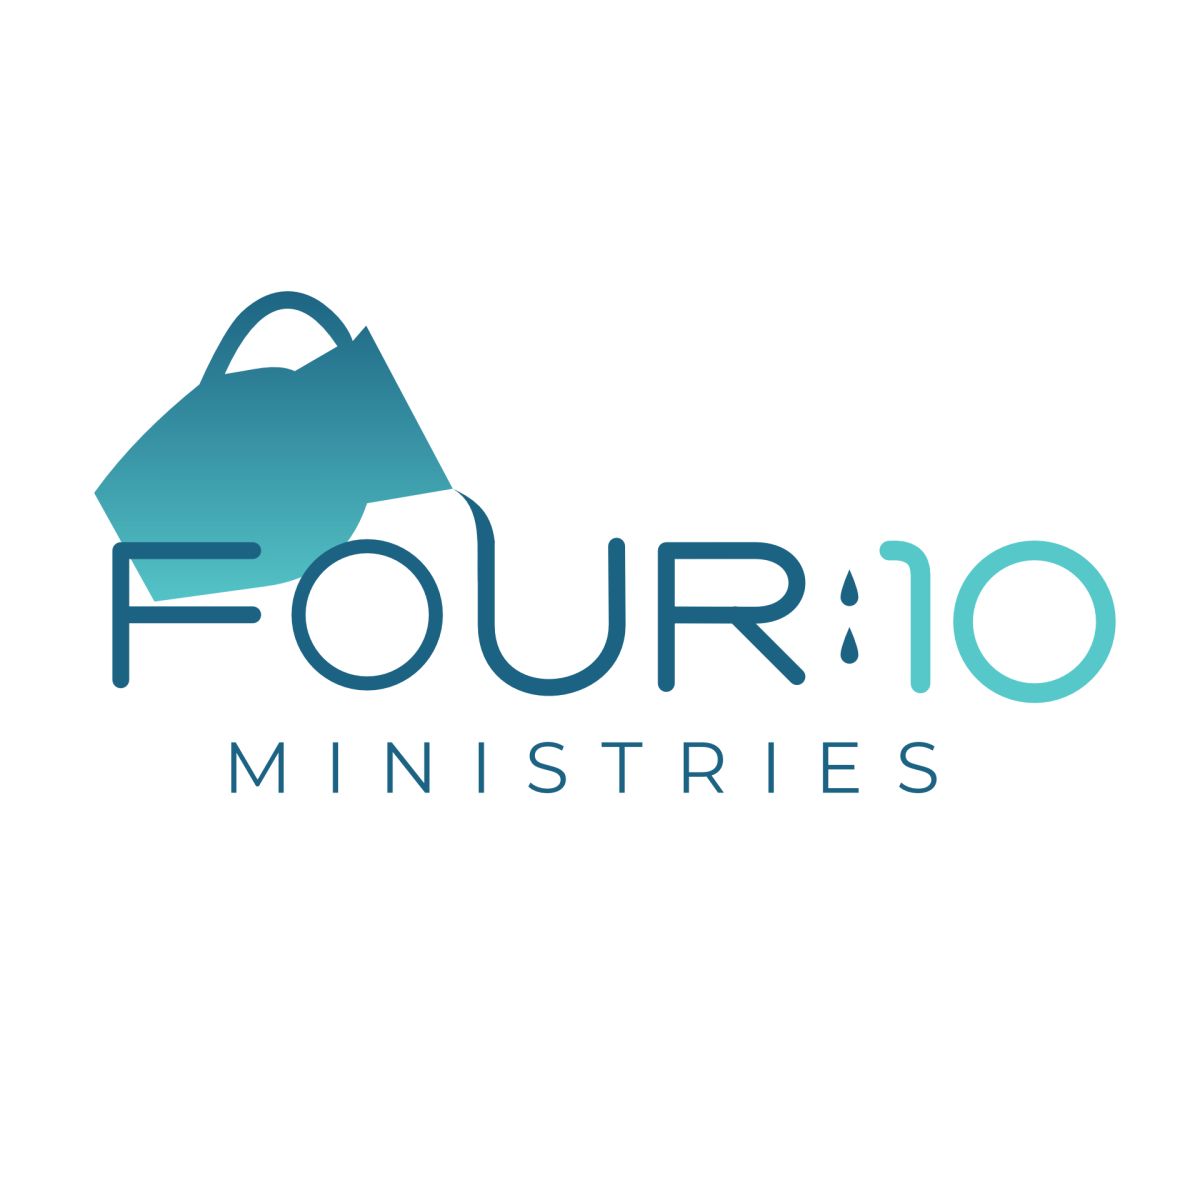 Four:10 Logo